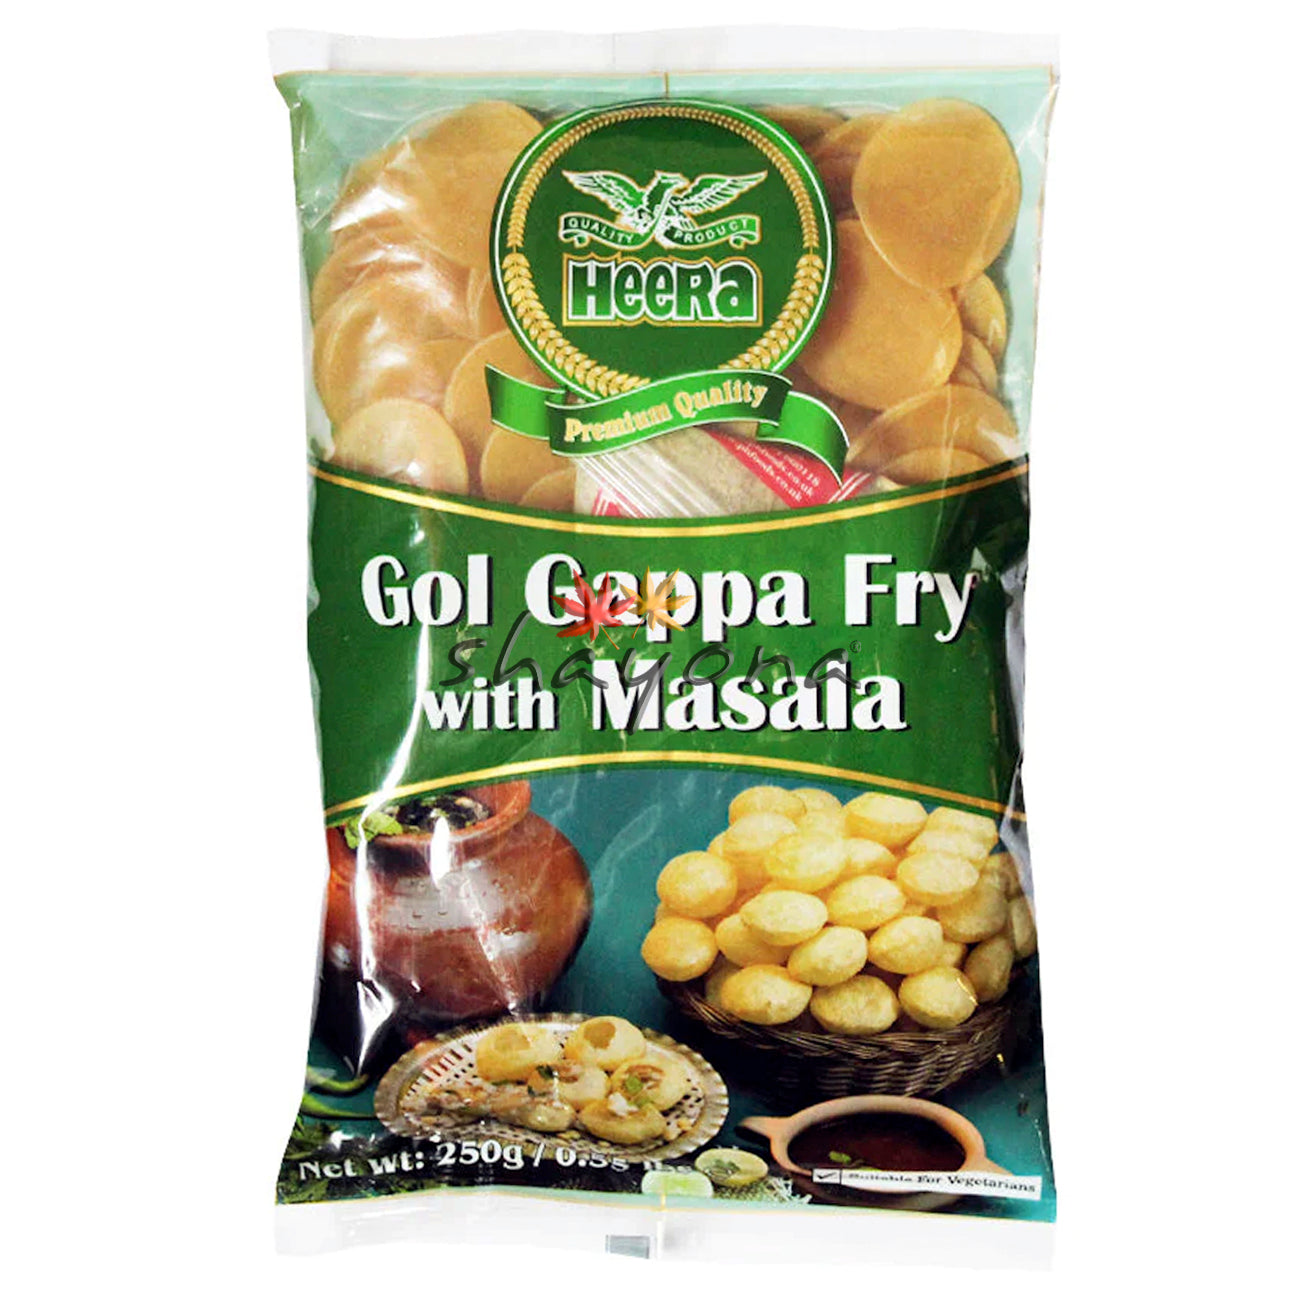 Heera Gol Gappa Fry with Masala